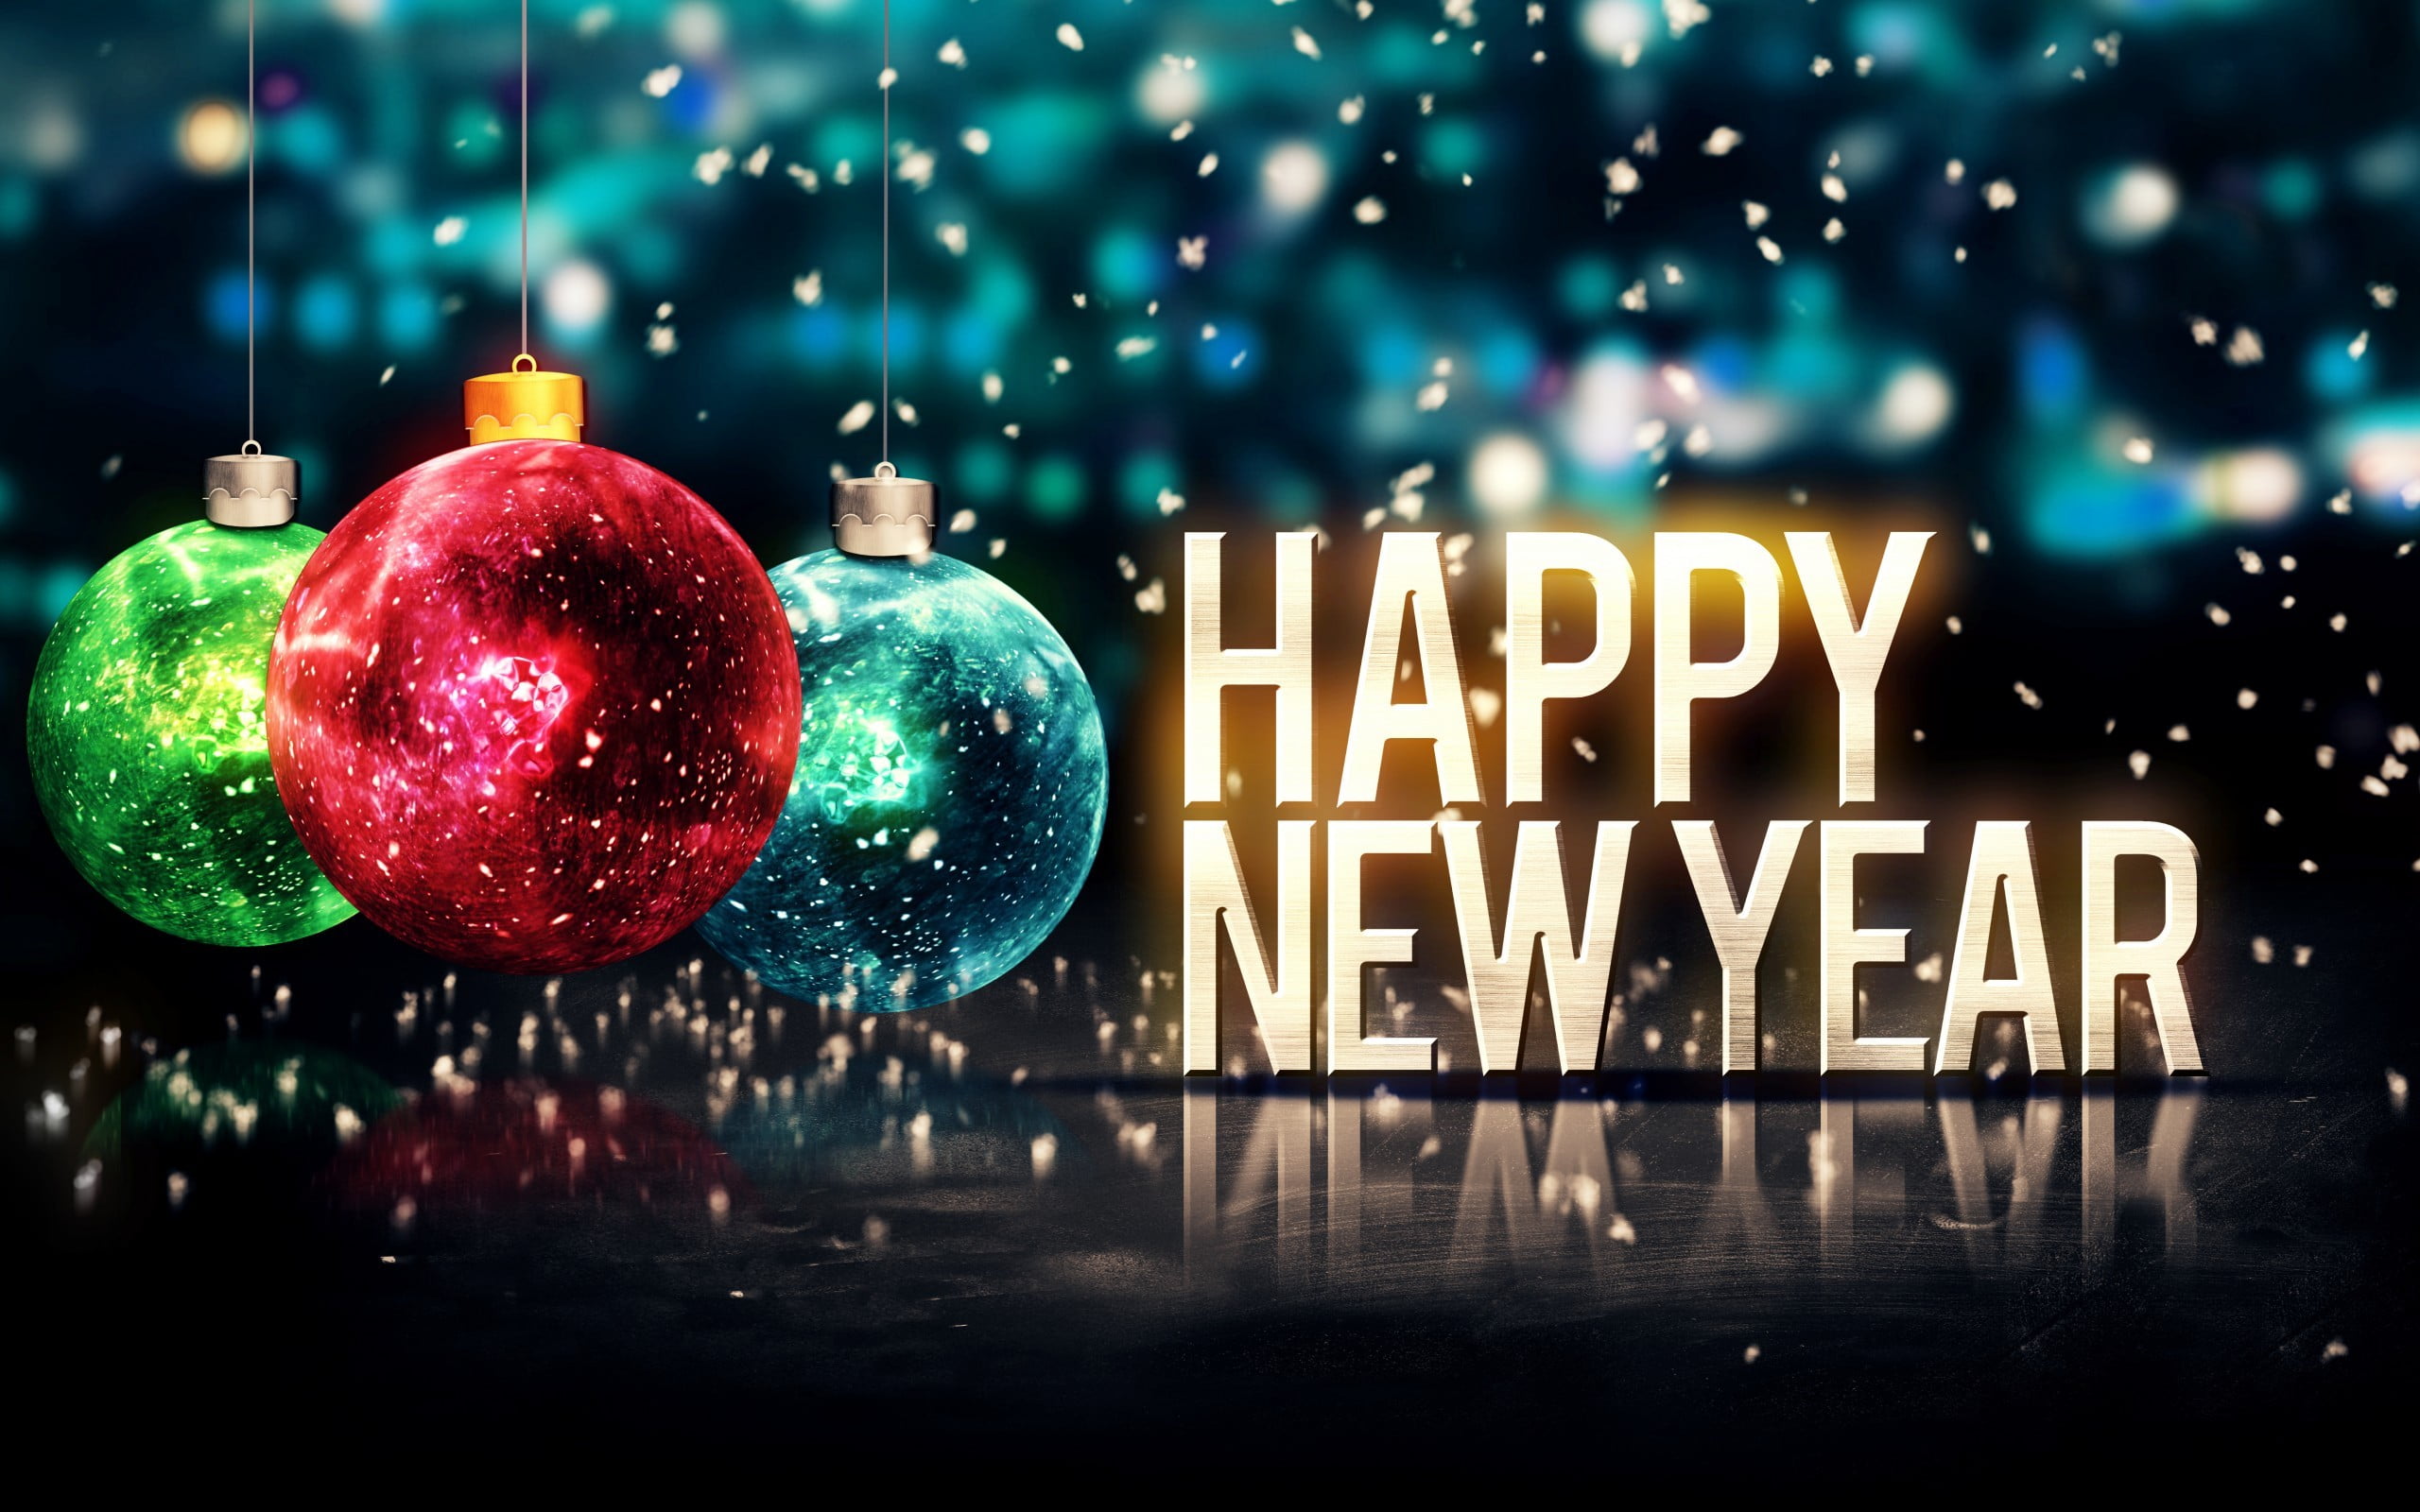 Happy New Year digital wallpaper, snow, Christmas ornaments, illuminated